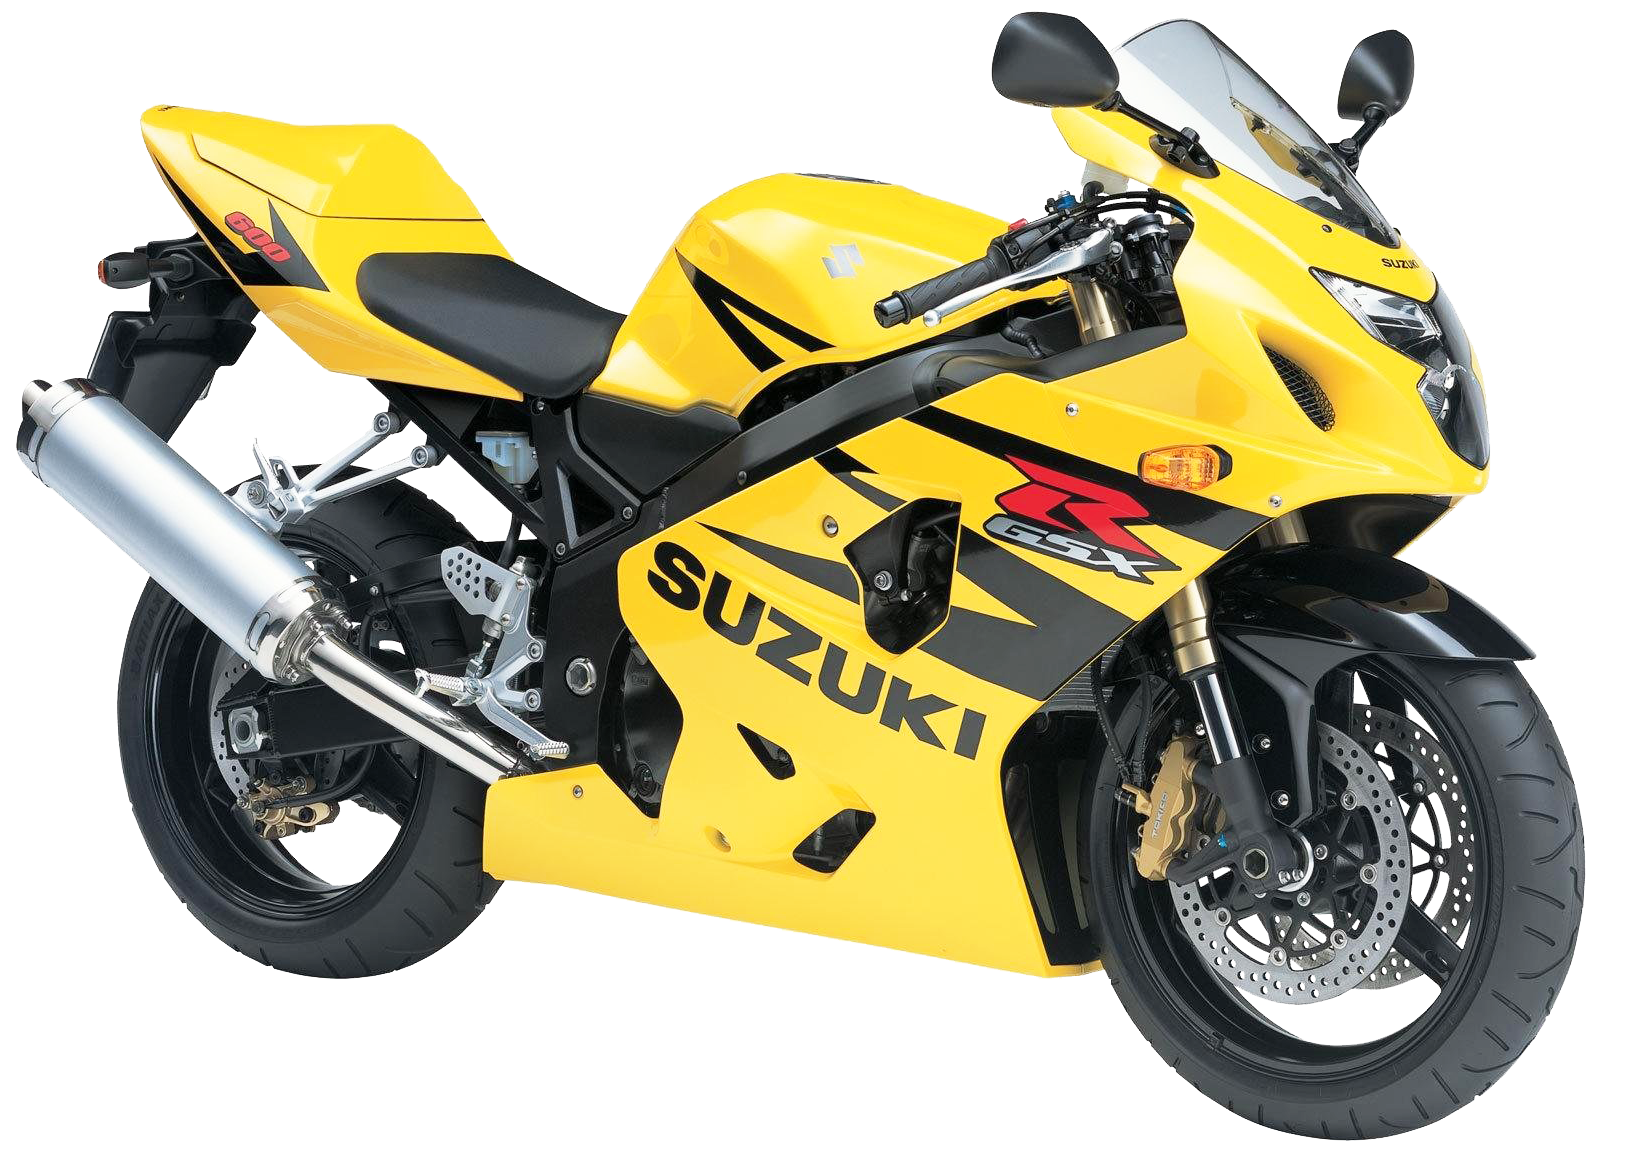 Suzuki Bike PNG Gambar Berkualitas Tinggi